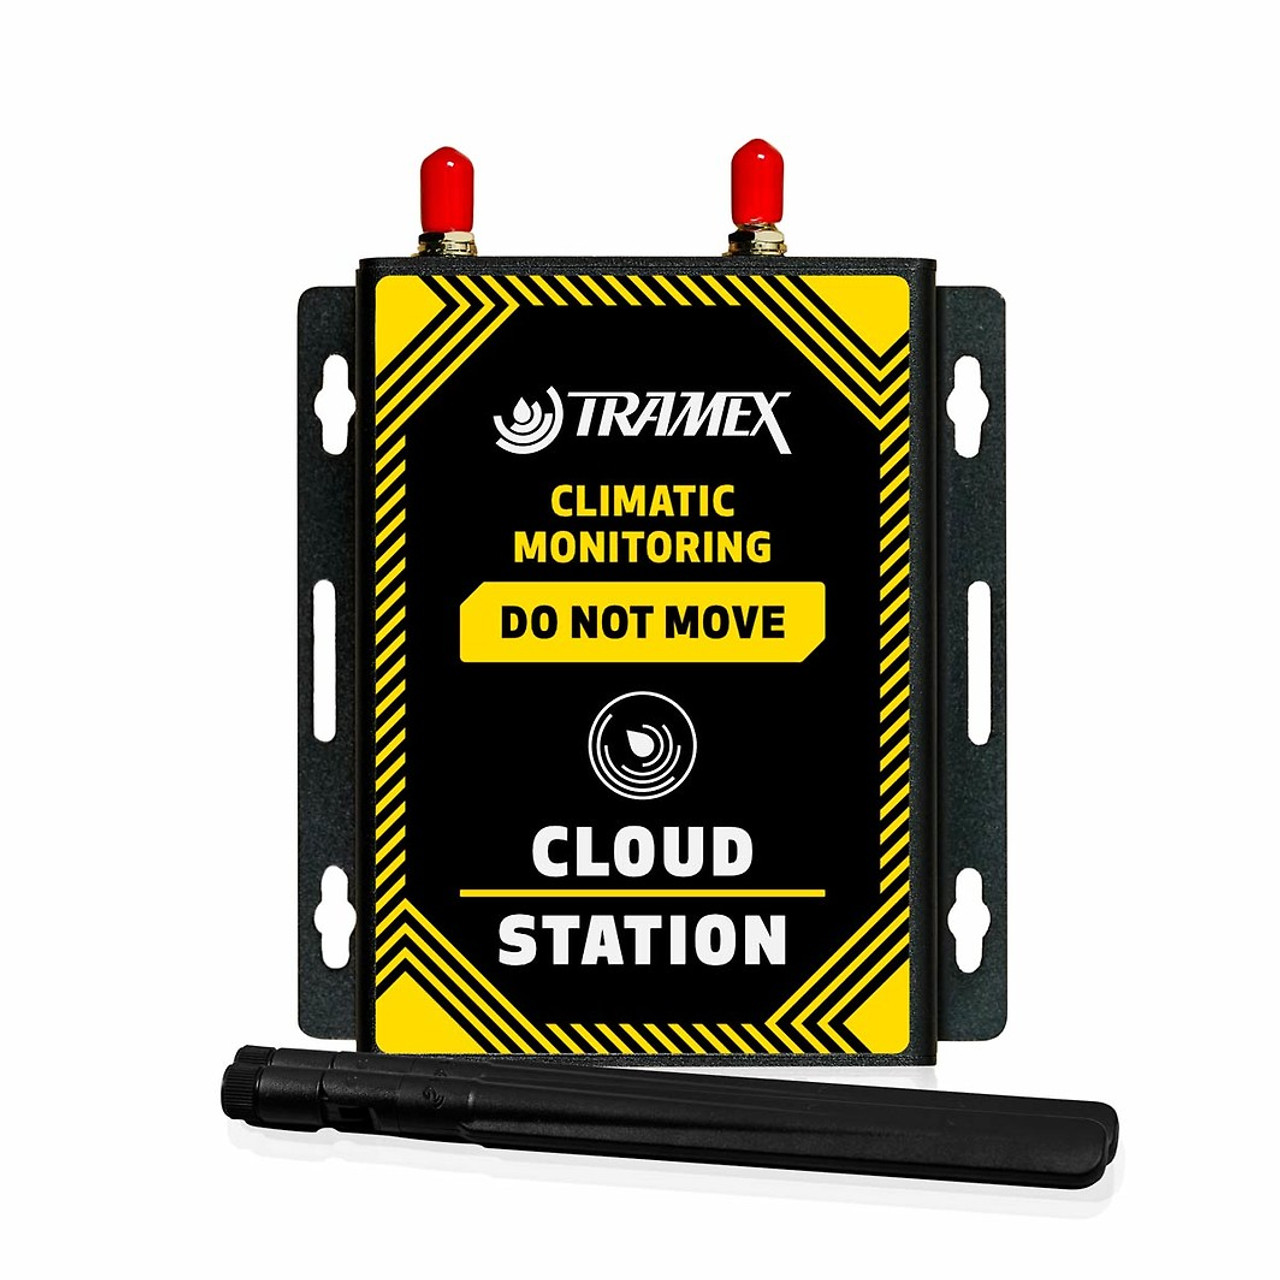 Tramex Remote Environmental Monitoring System Kit - TREMS 5